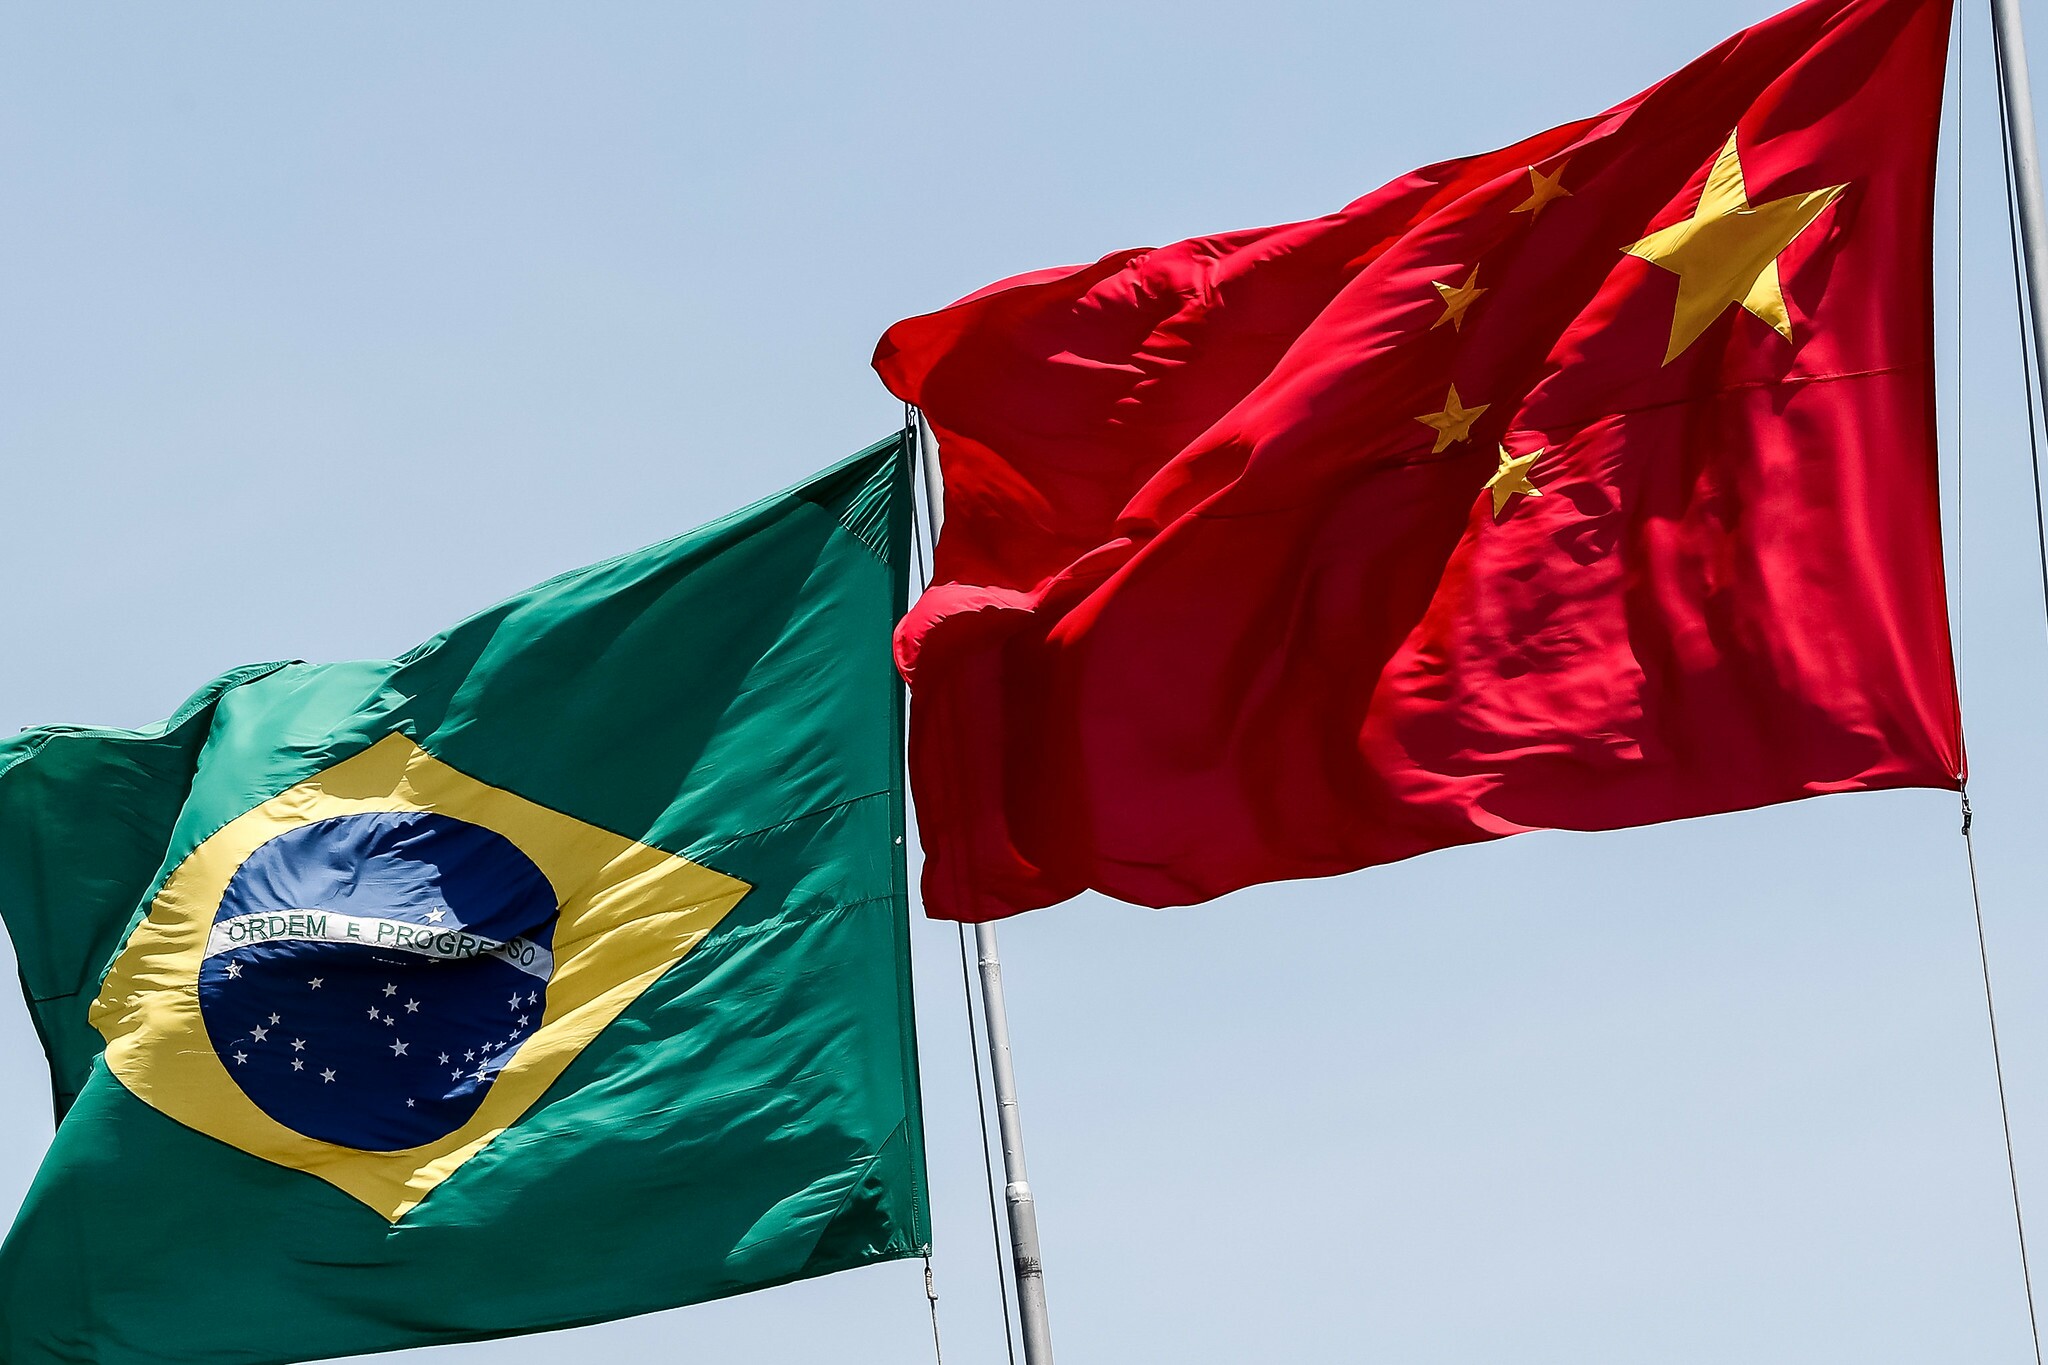 Brasil e China